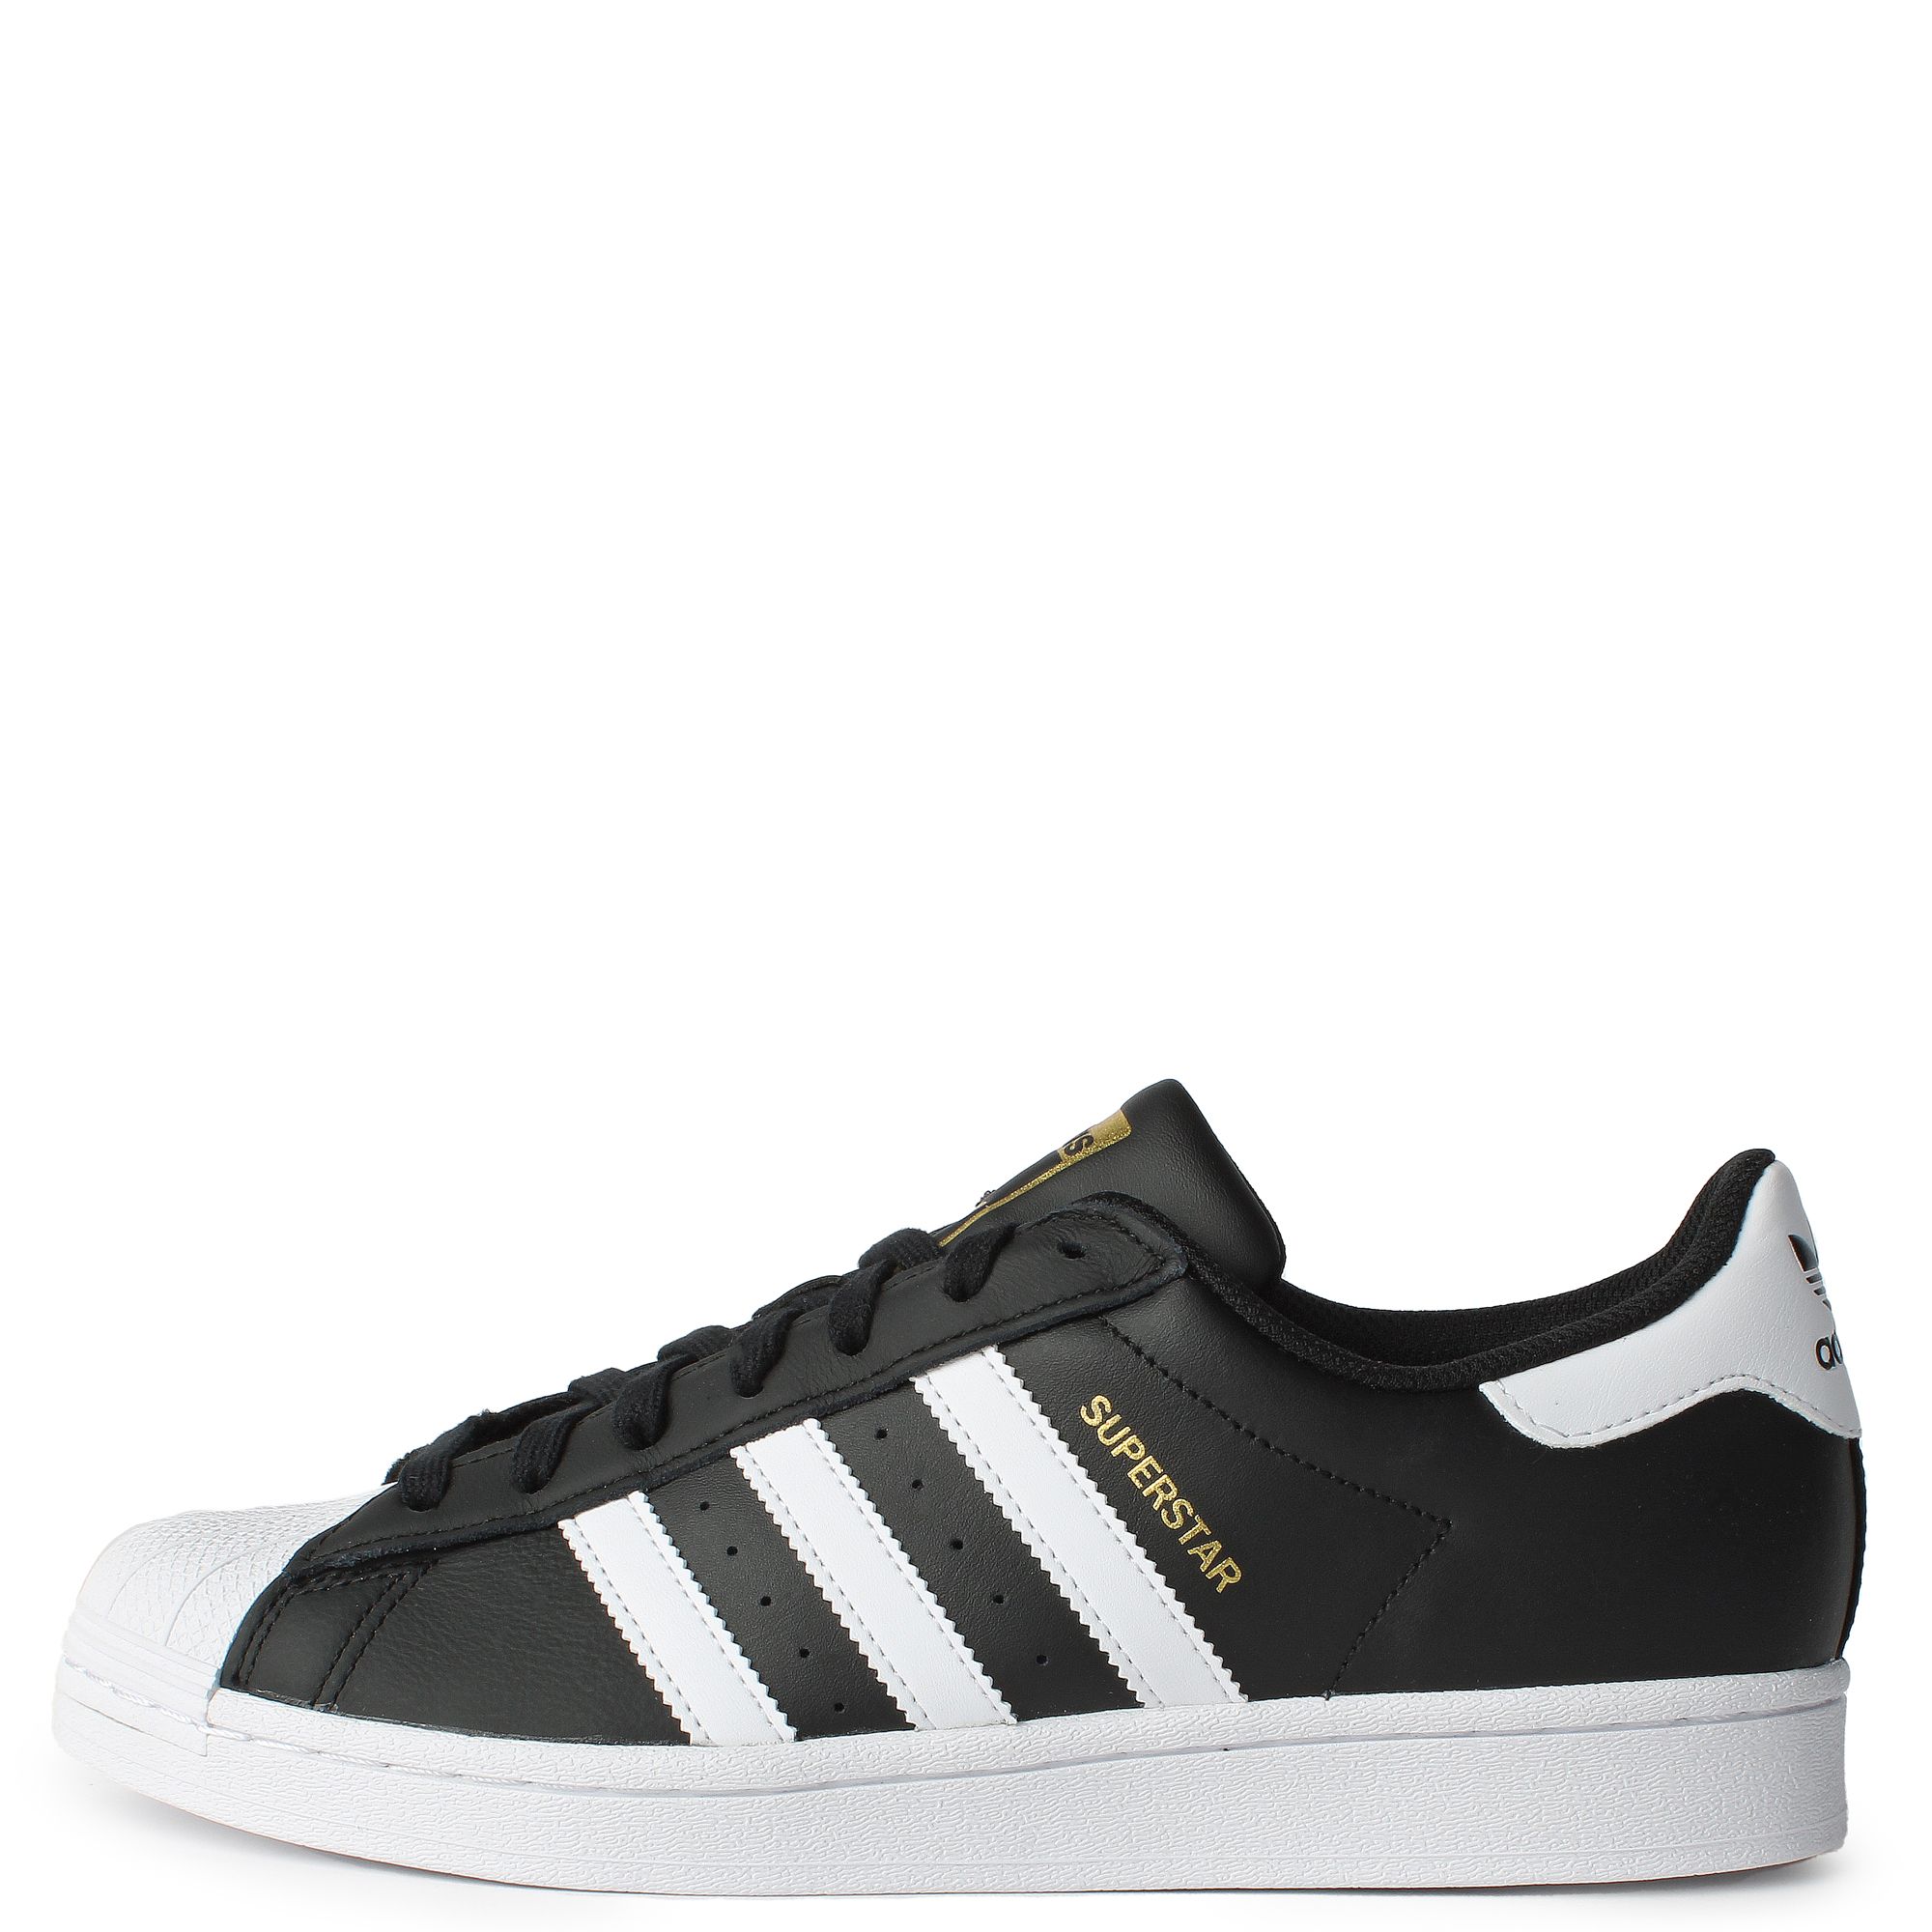 adidas Superstar Ii (Triple Black)  Adidas superstar black, Sneakers  fashion, All black shoes